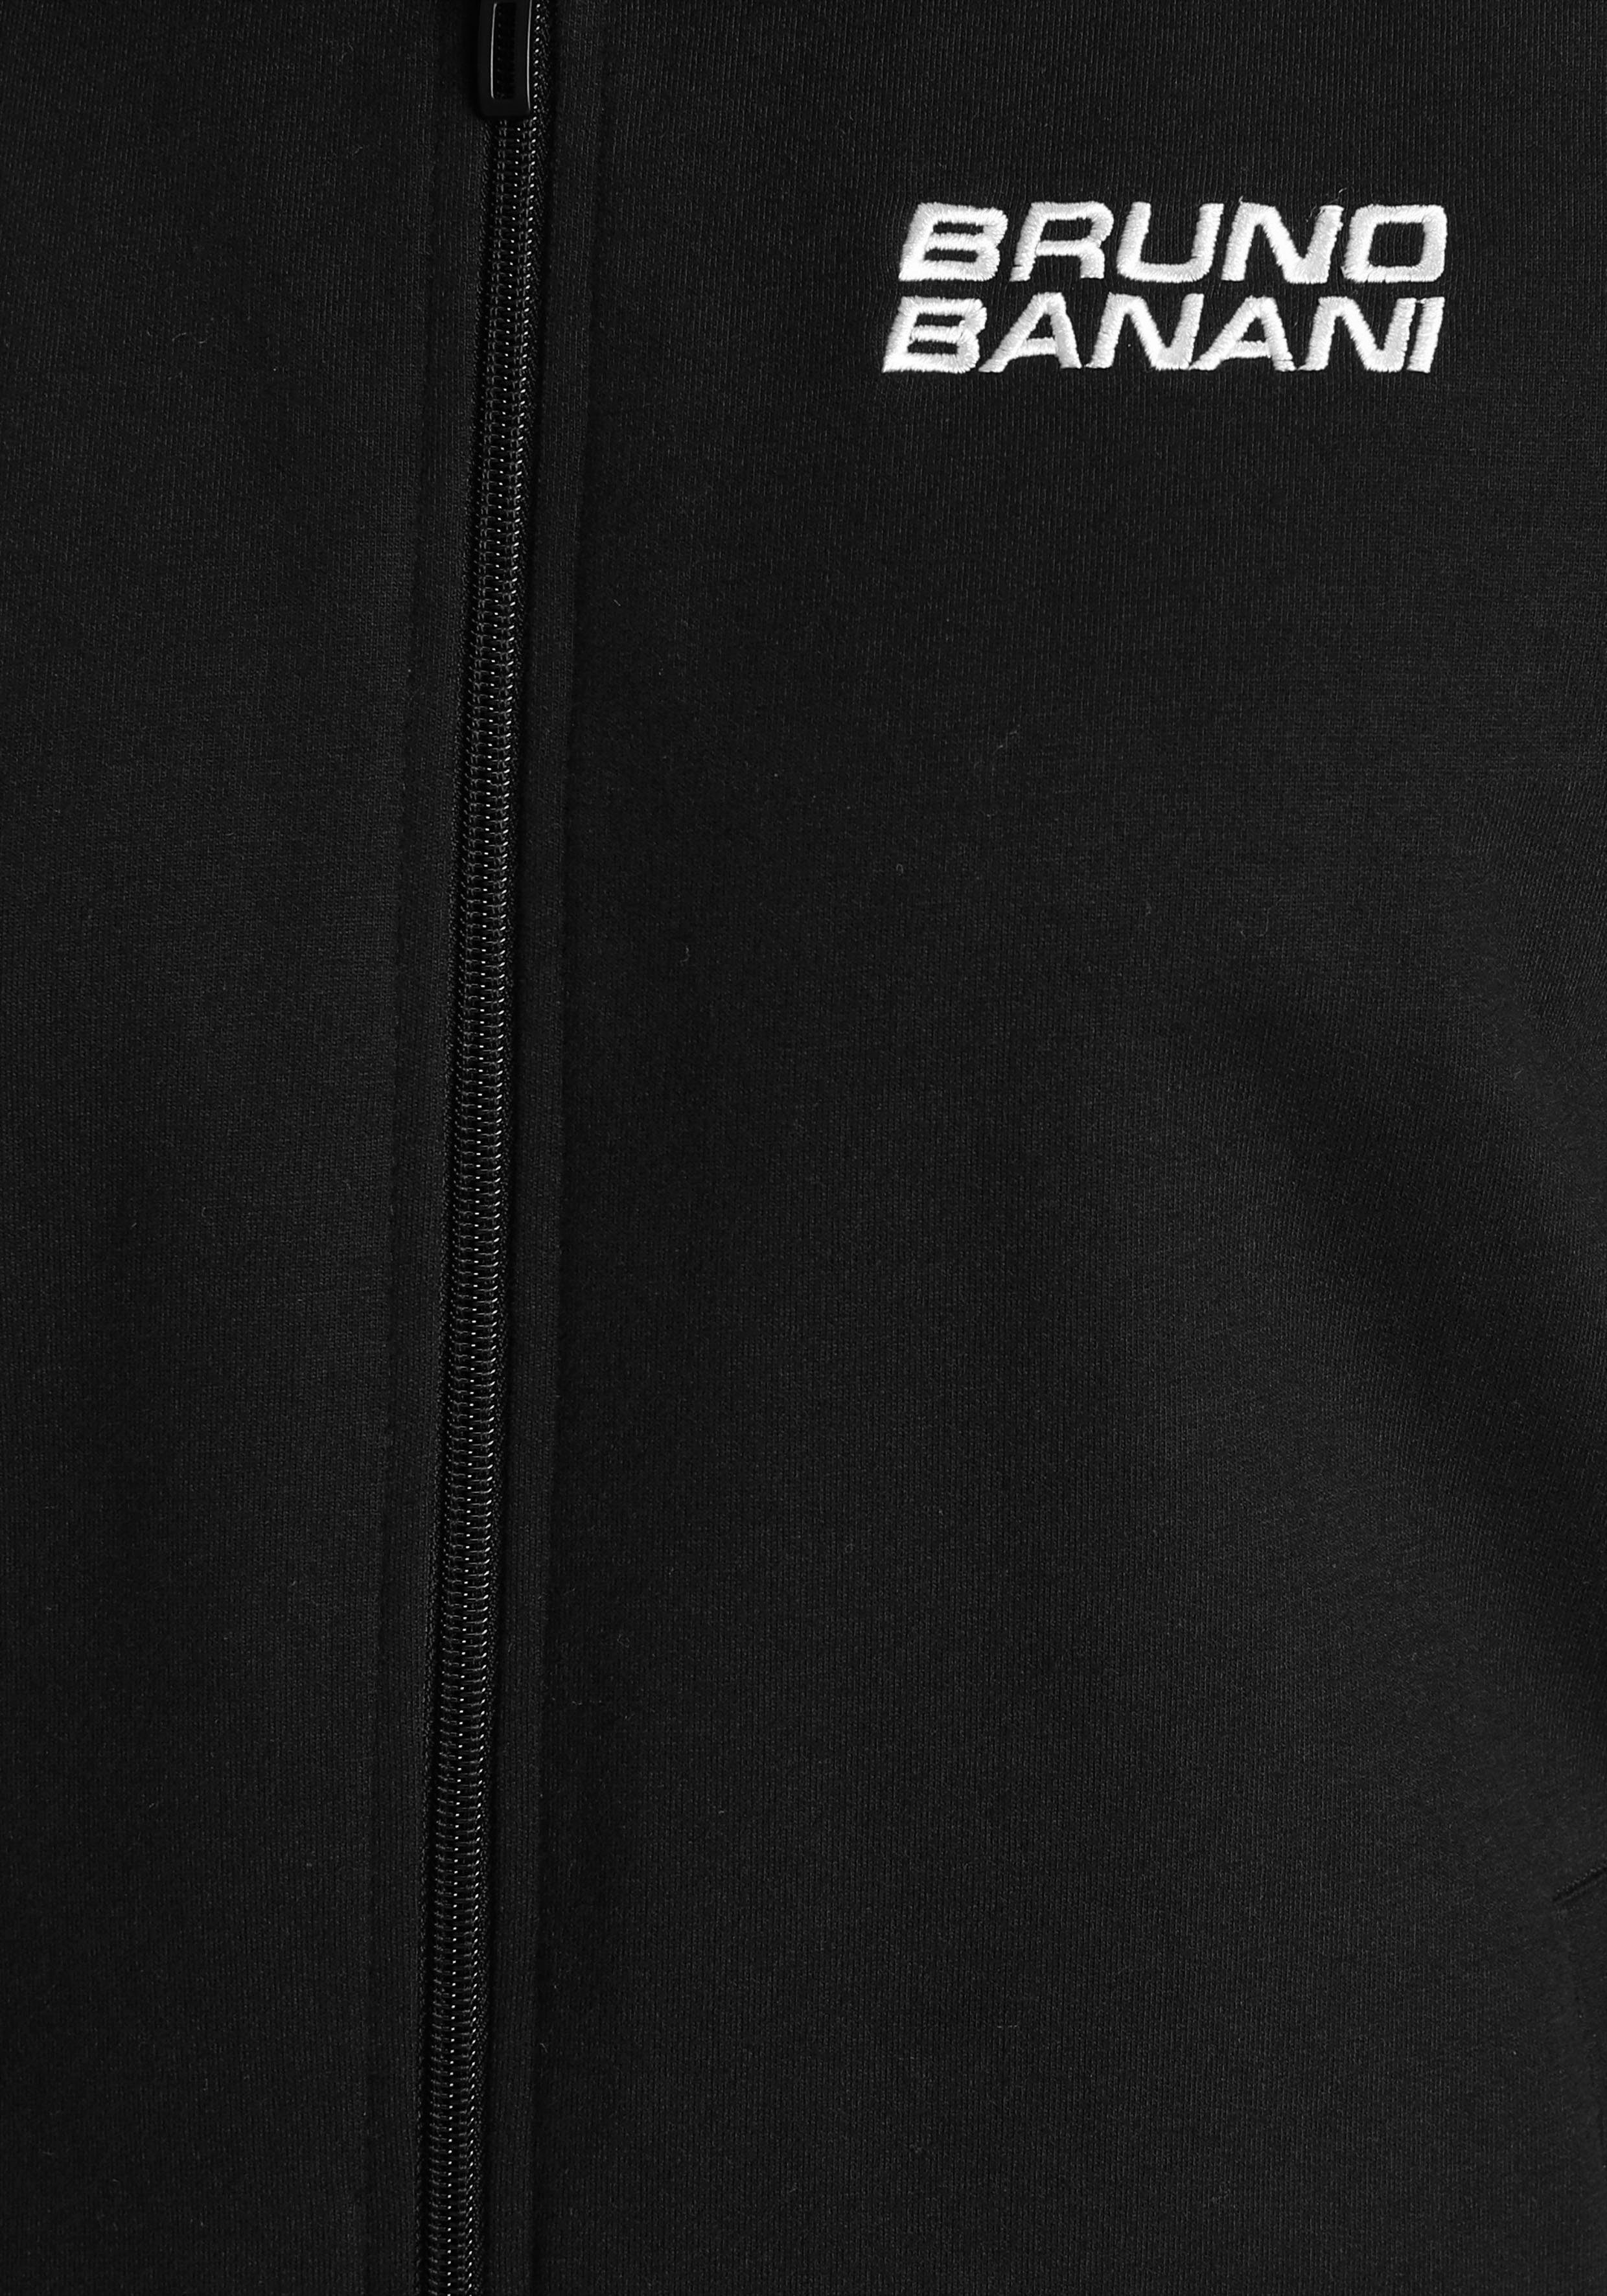 Banani schwarz-grau Stickerei Comfort Jogginganzug Fit, Bruno mit Logo